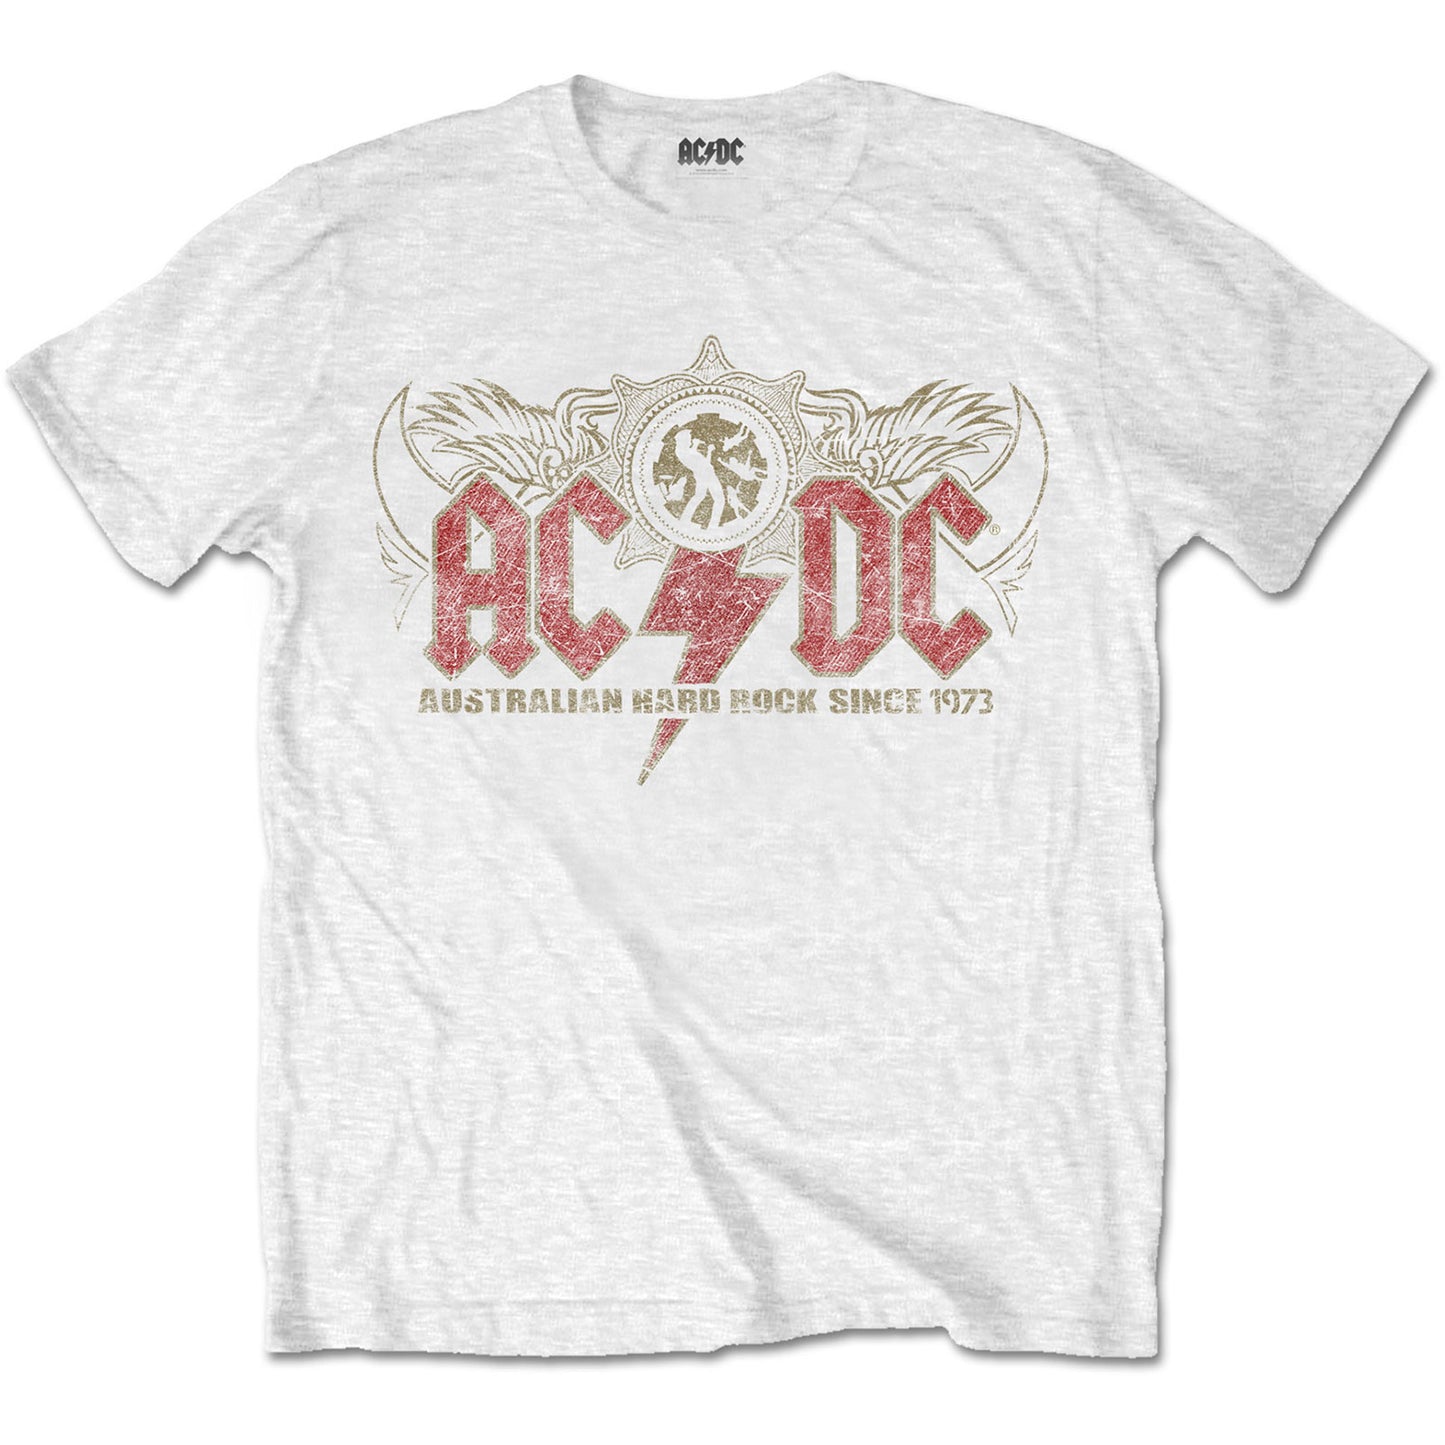 AC/DC T-Shirt: Oz Rock